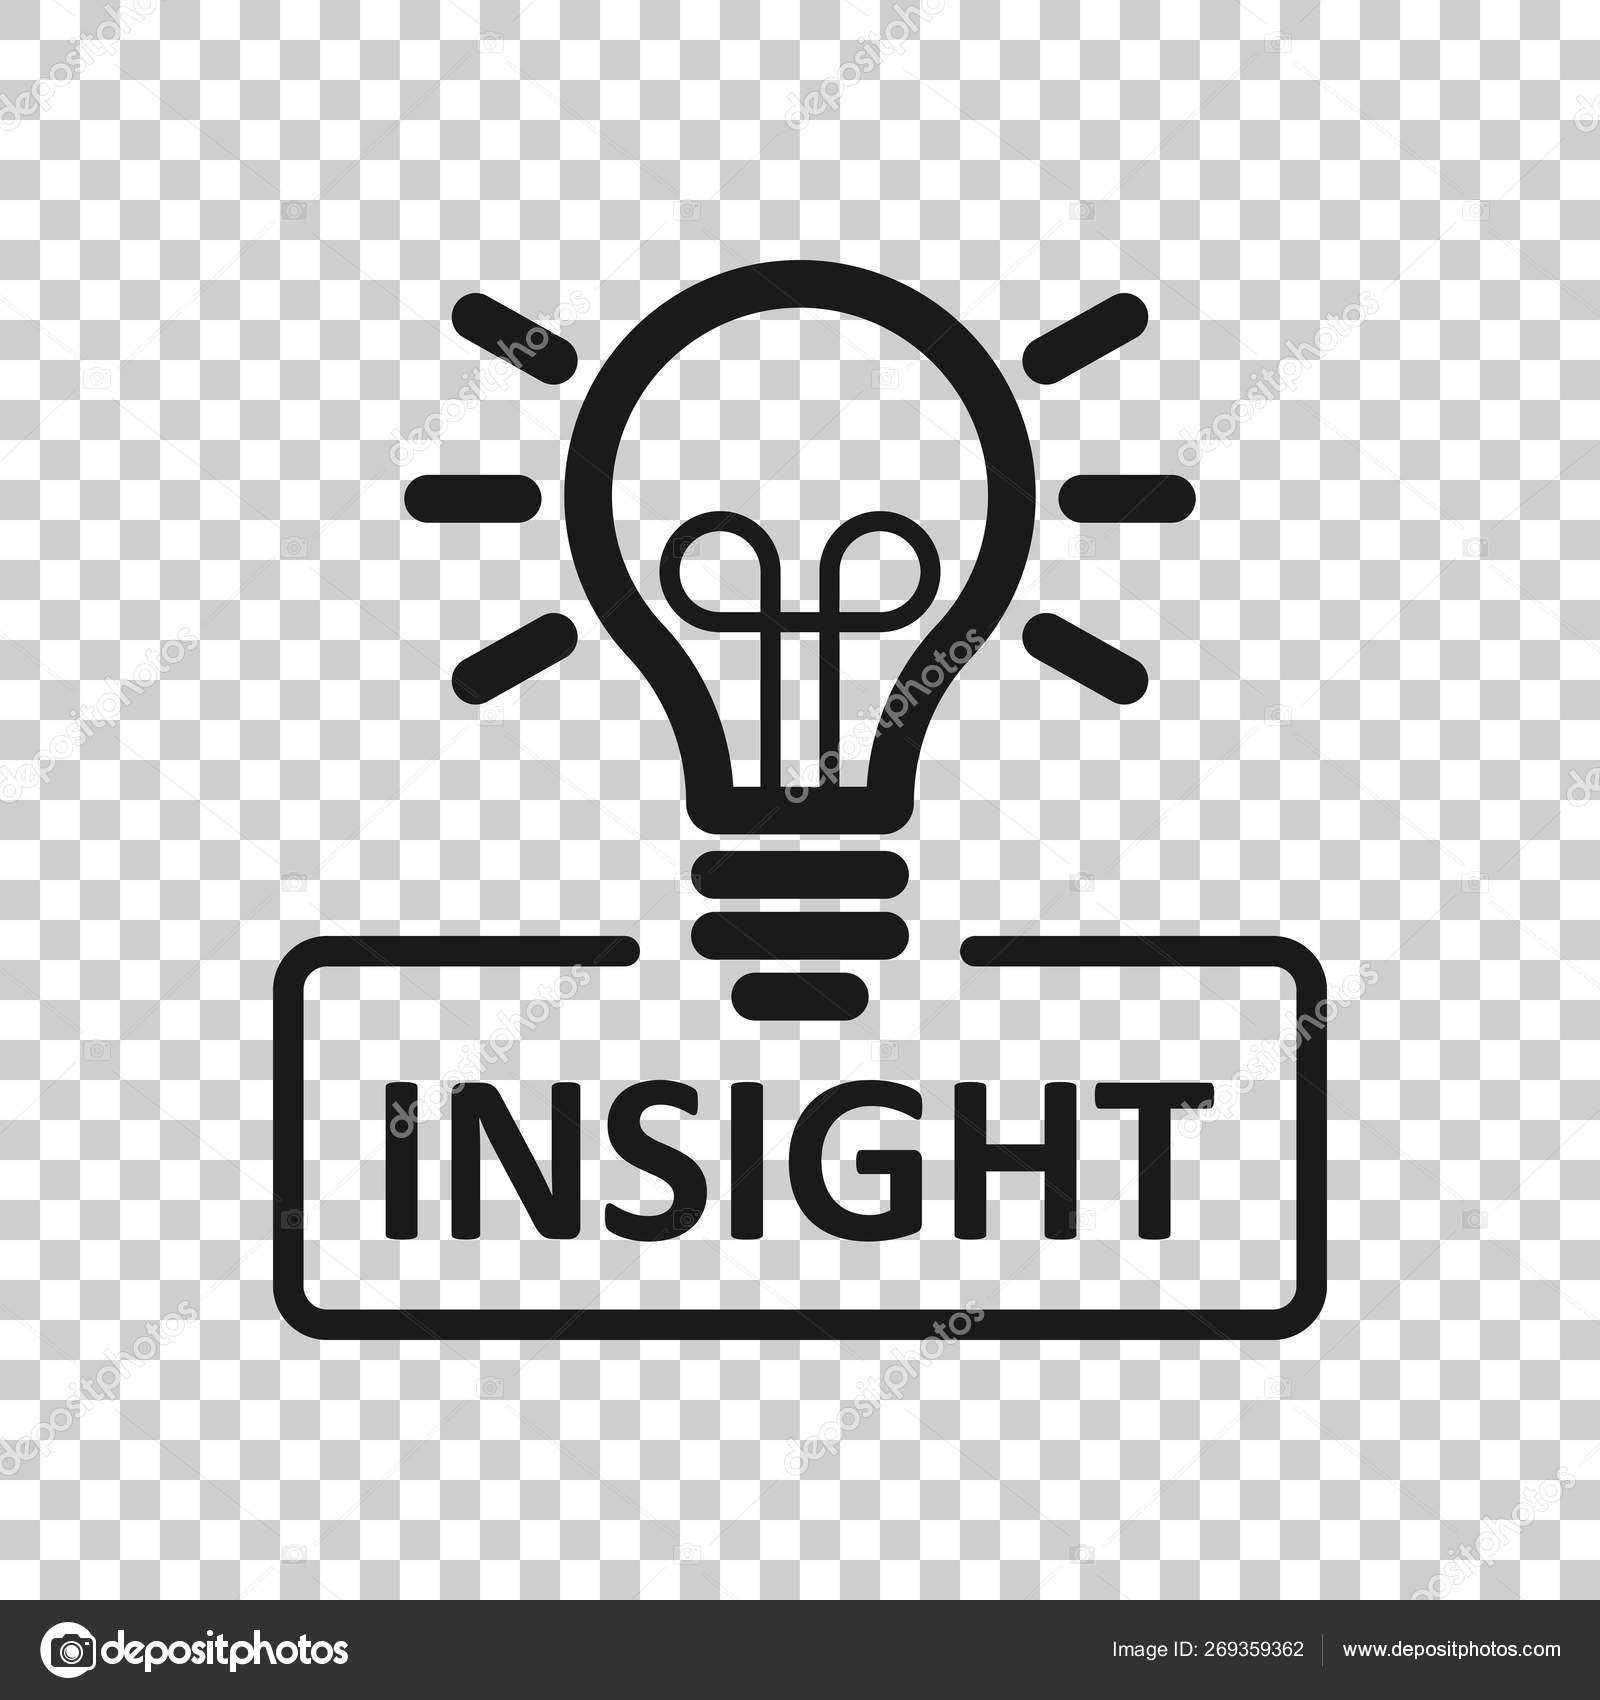 #insight InSight - Wikipedia stories highlights, photos ...